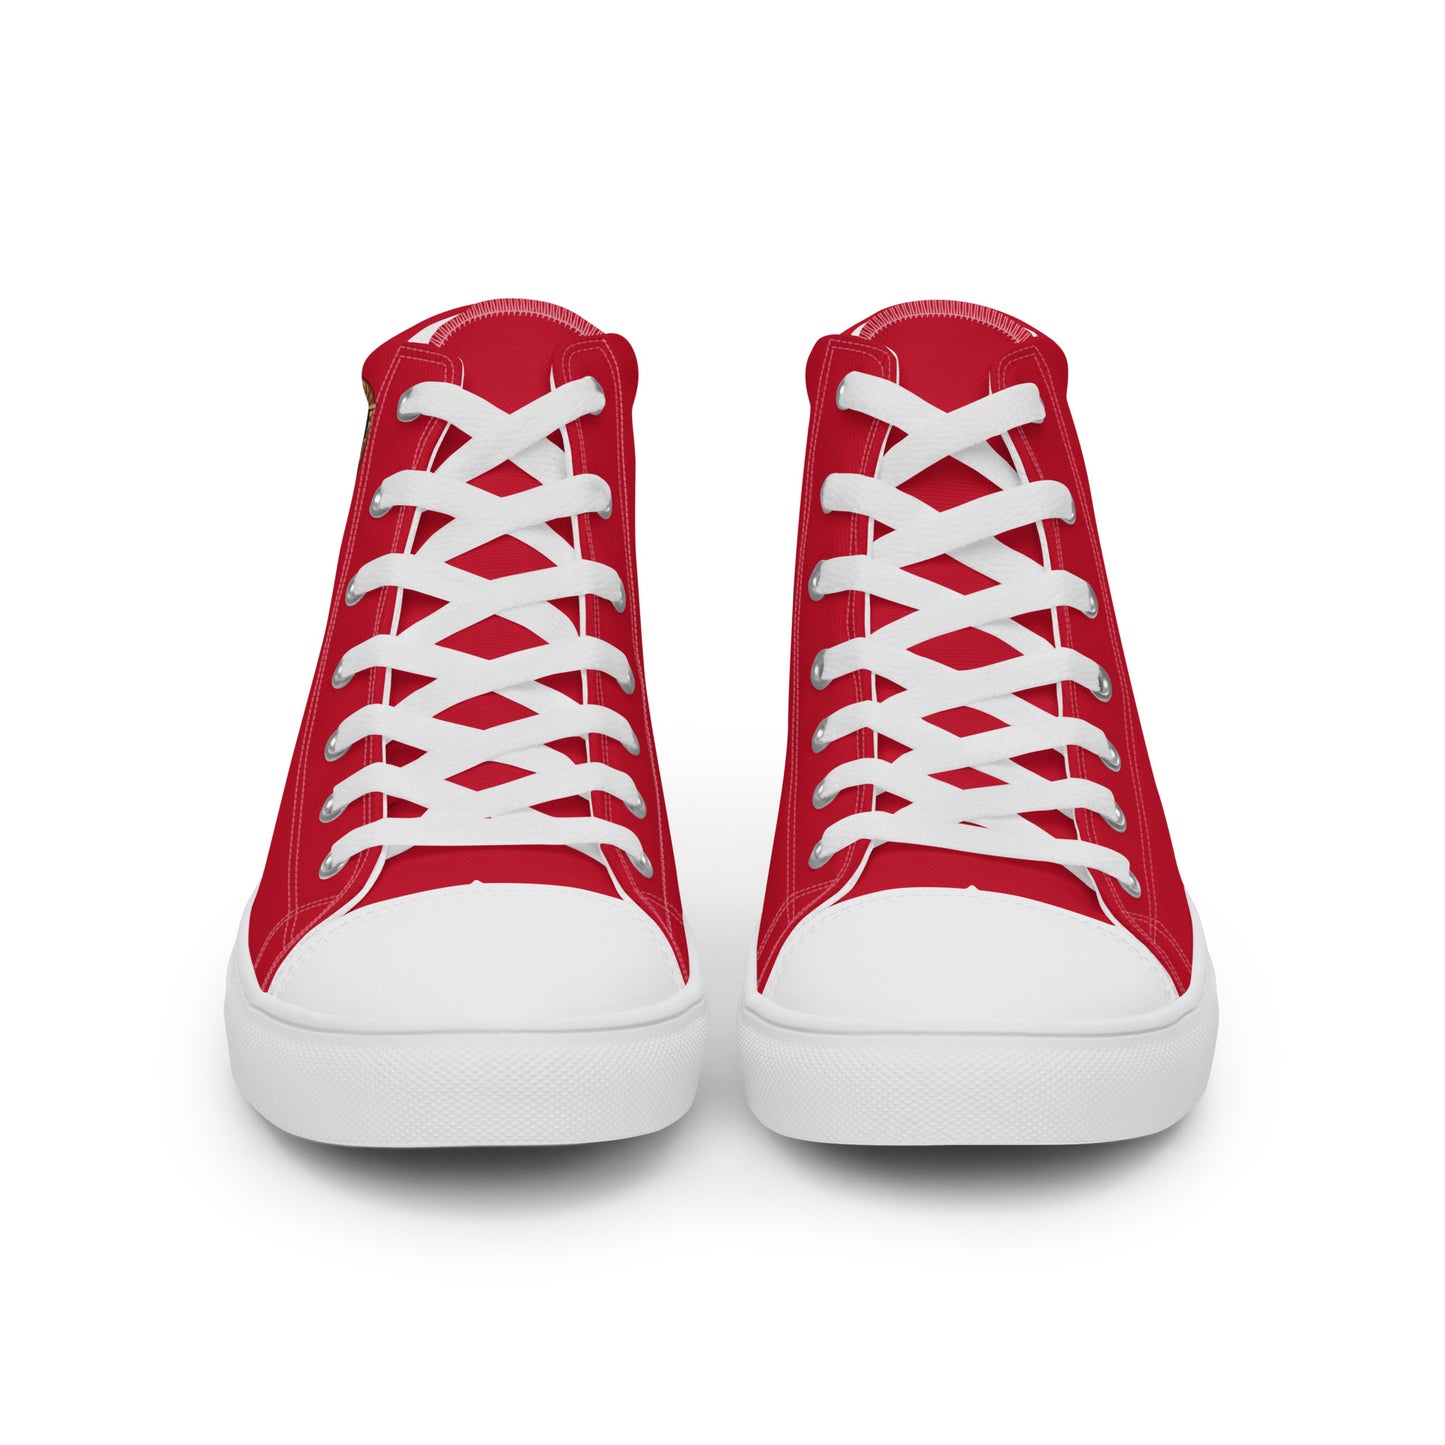 México - Men - Red - High top shoes